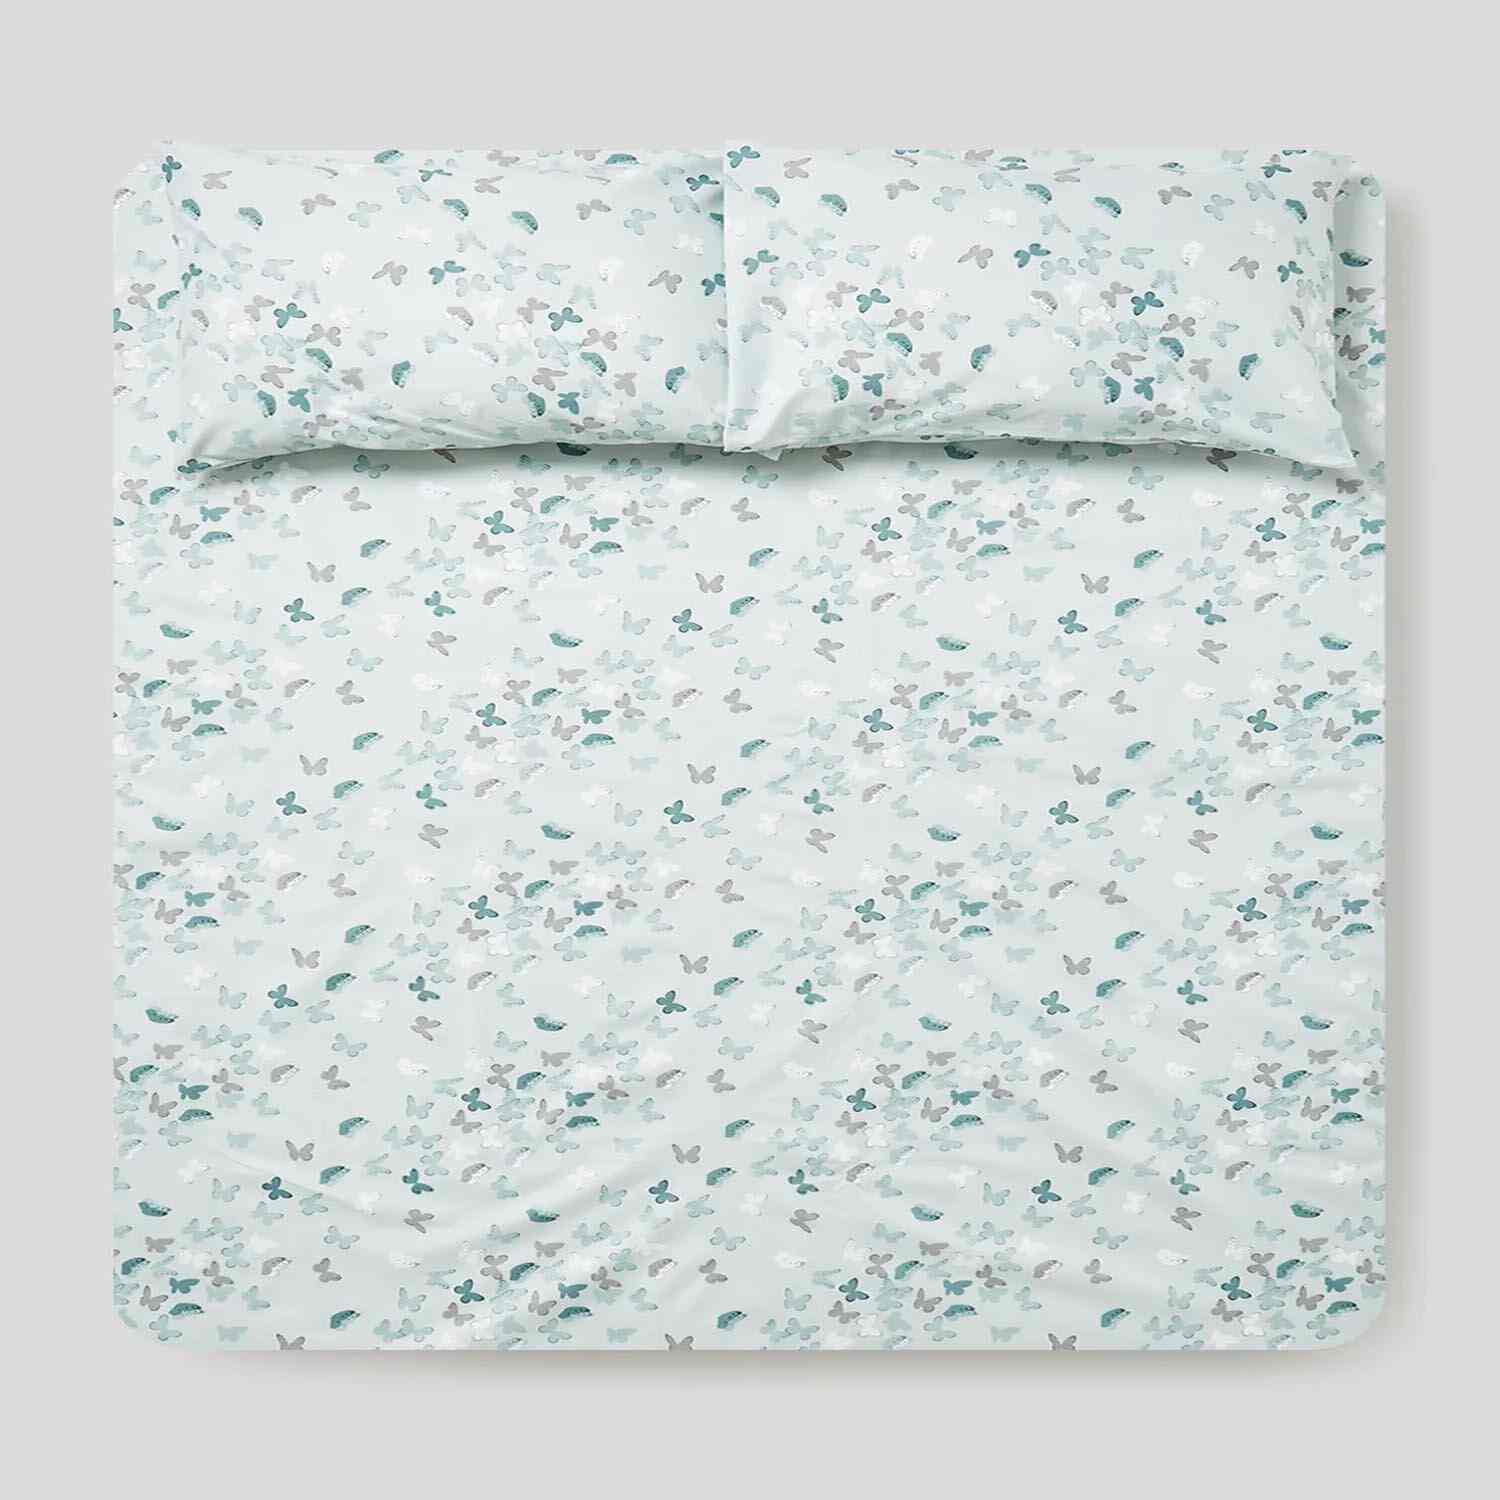 Rishahome 3-Piece Printed 180 Tc Cotton Bedsheet Set Queen Size, Premium Collection (1 Bedsheet + 2 Pillow Cases) Gray Garden